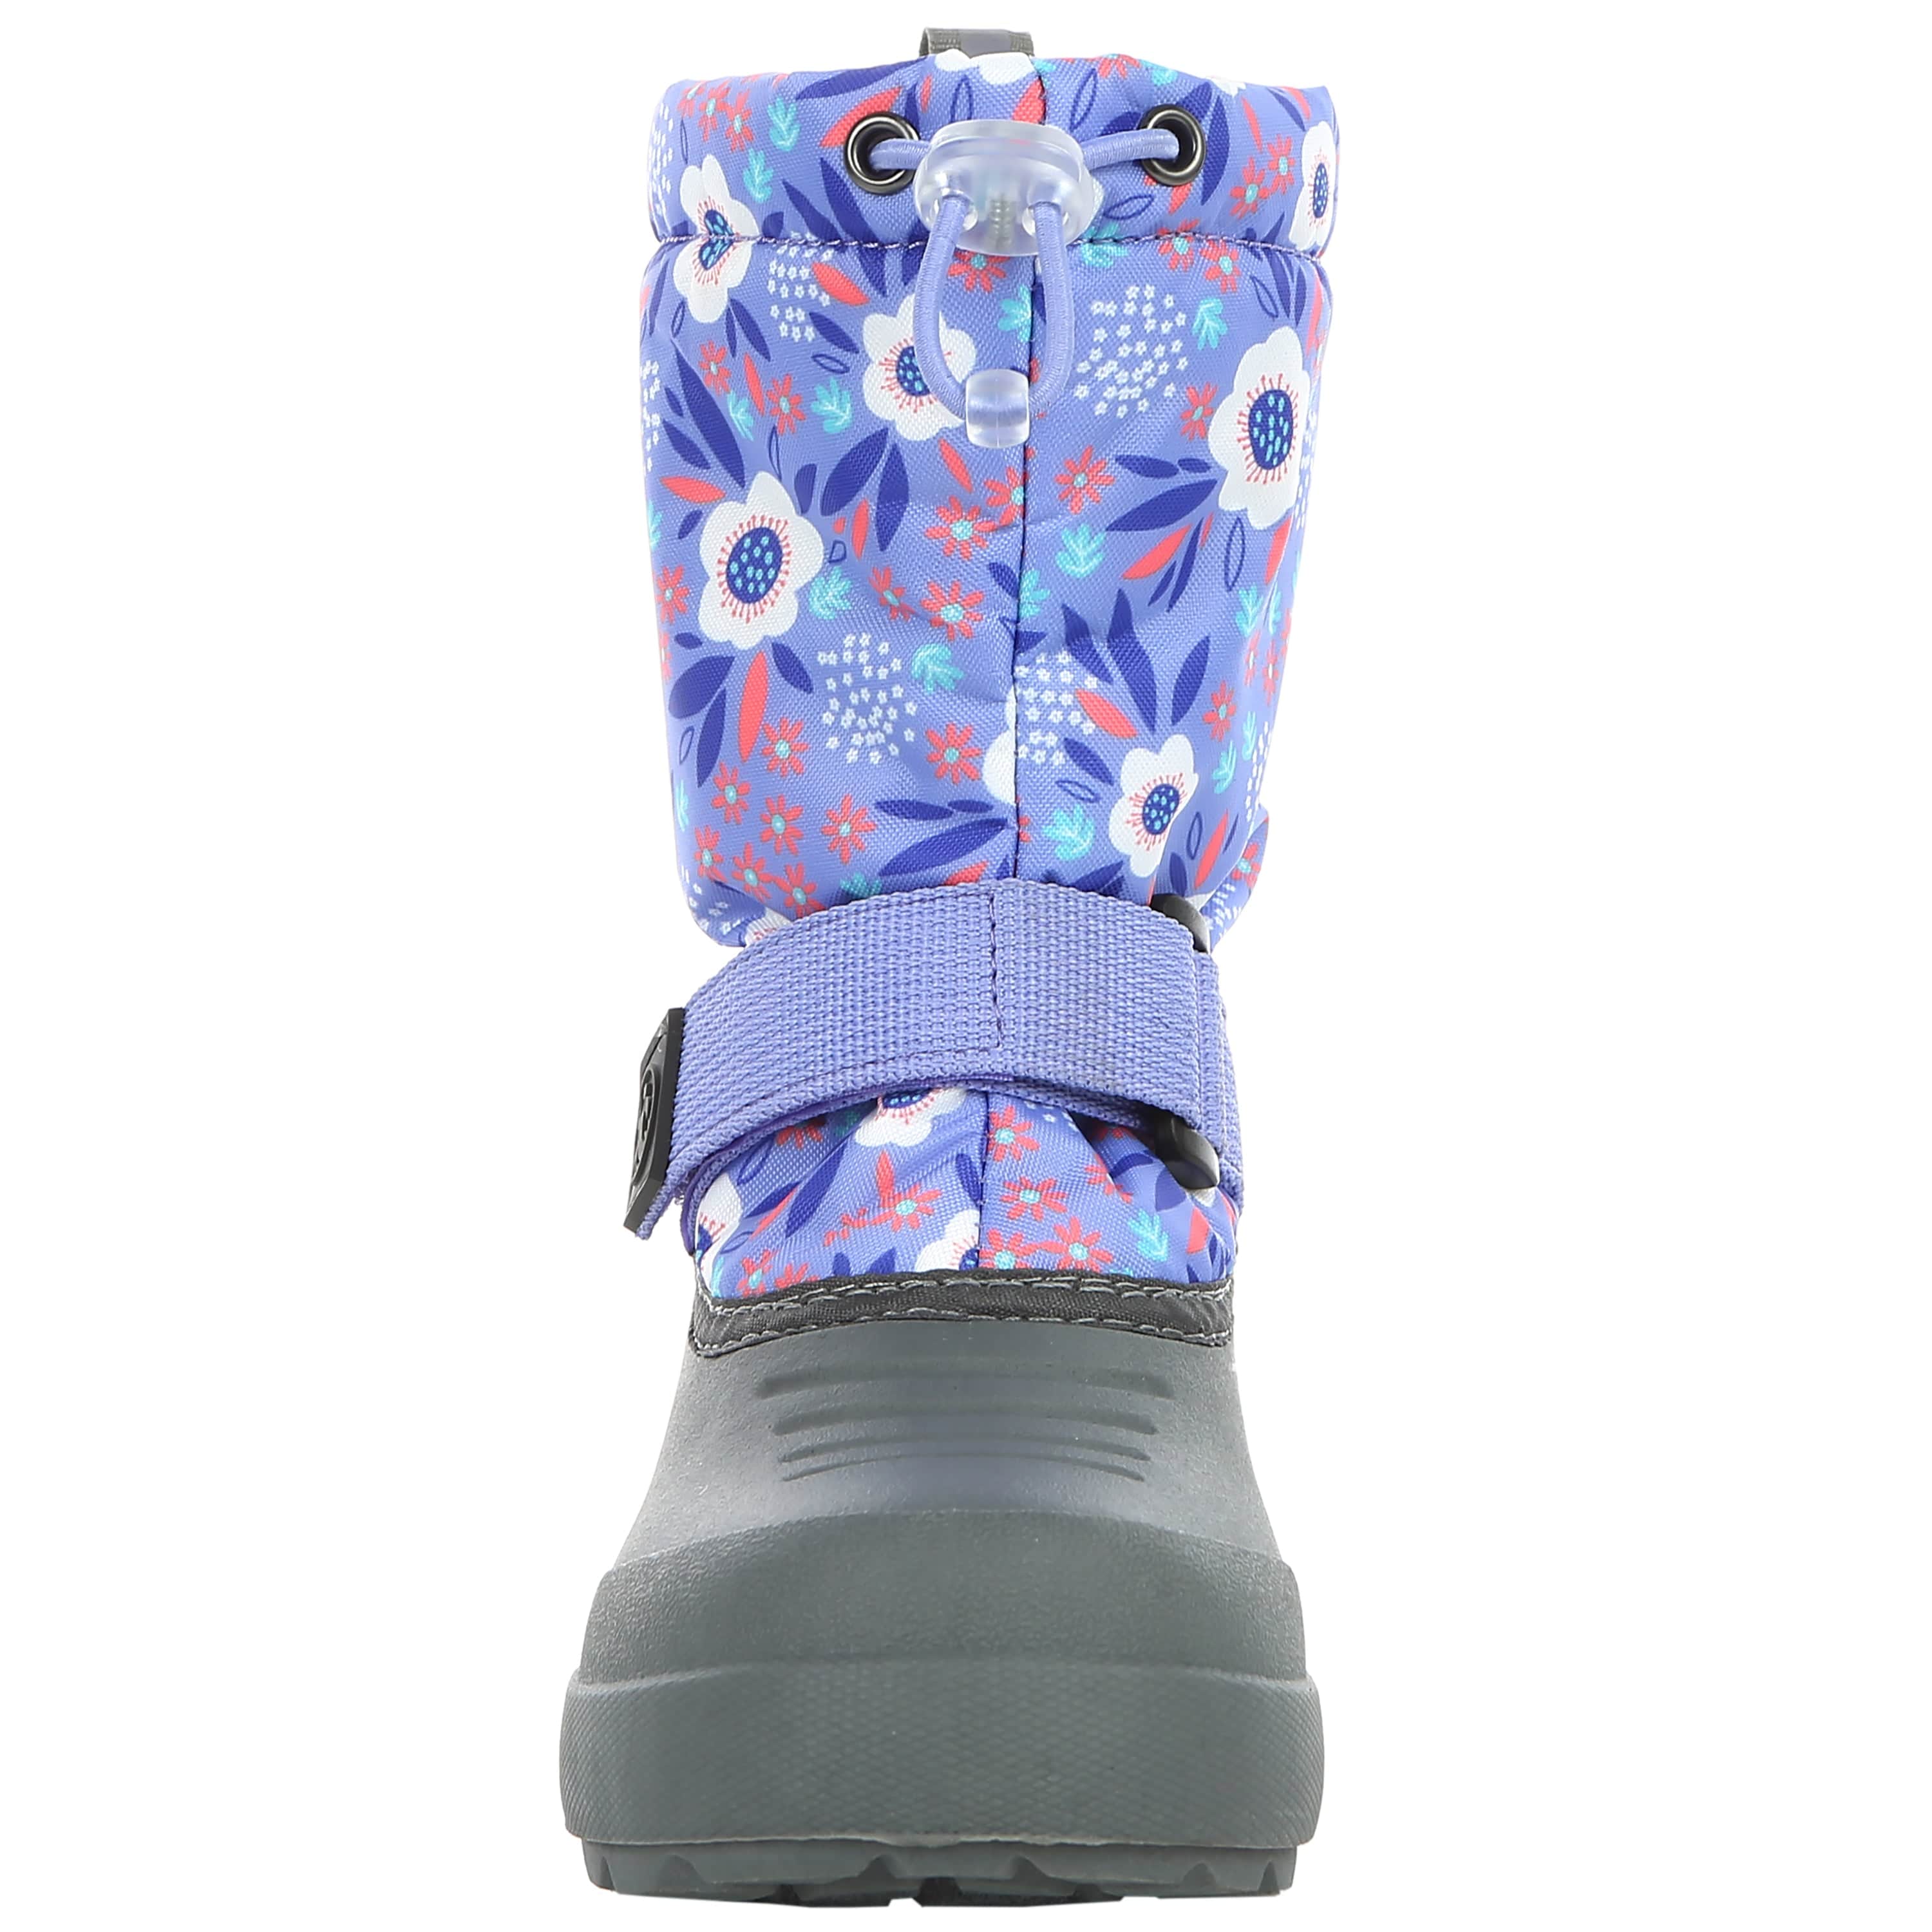 waterproof shell snow boots for girls purple cute